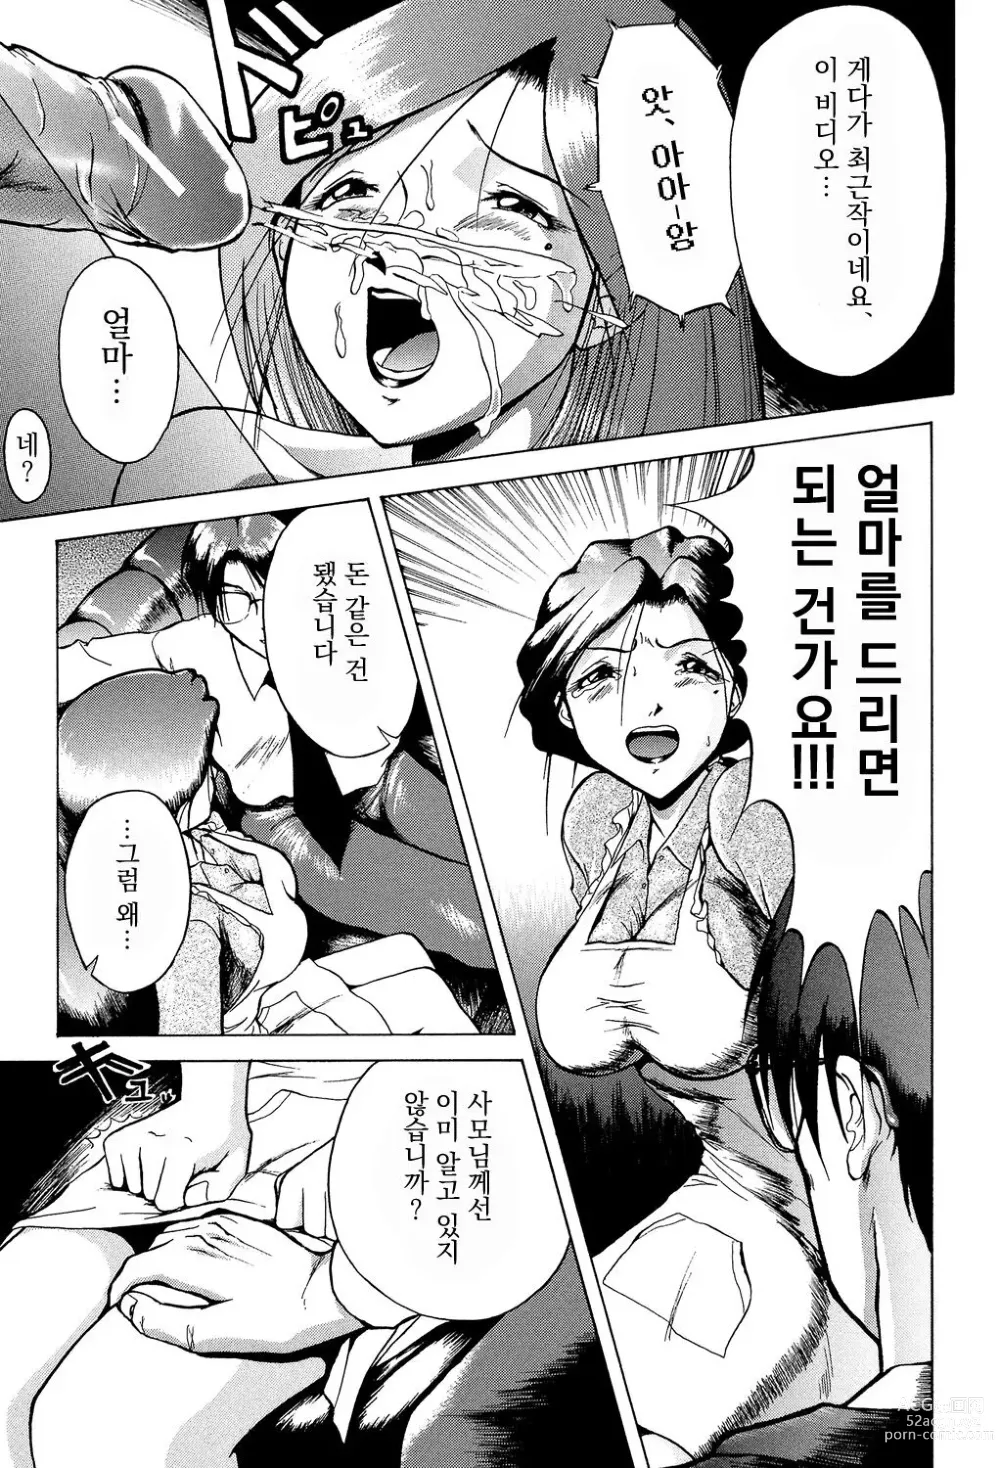 Page 5 of manga Inyou Reibo